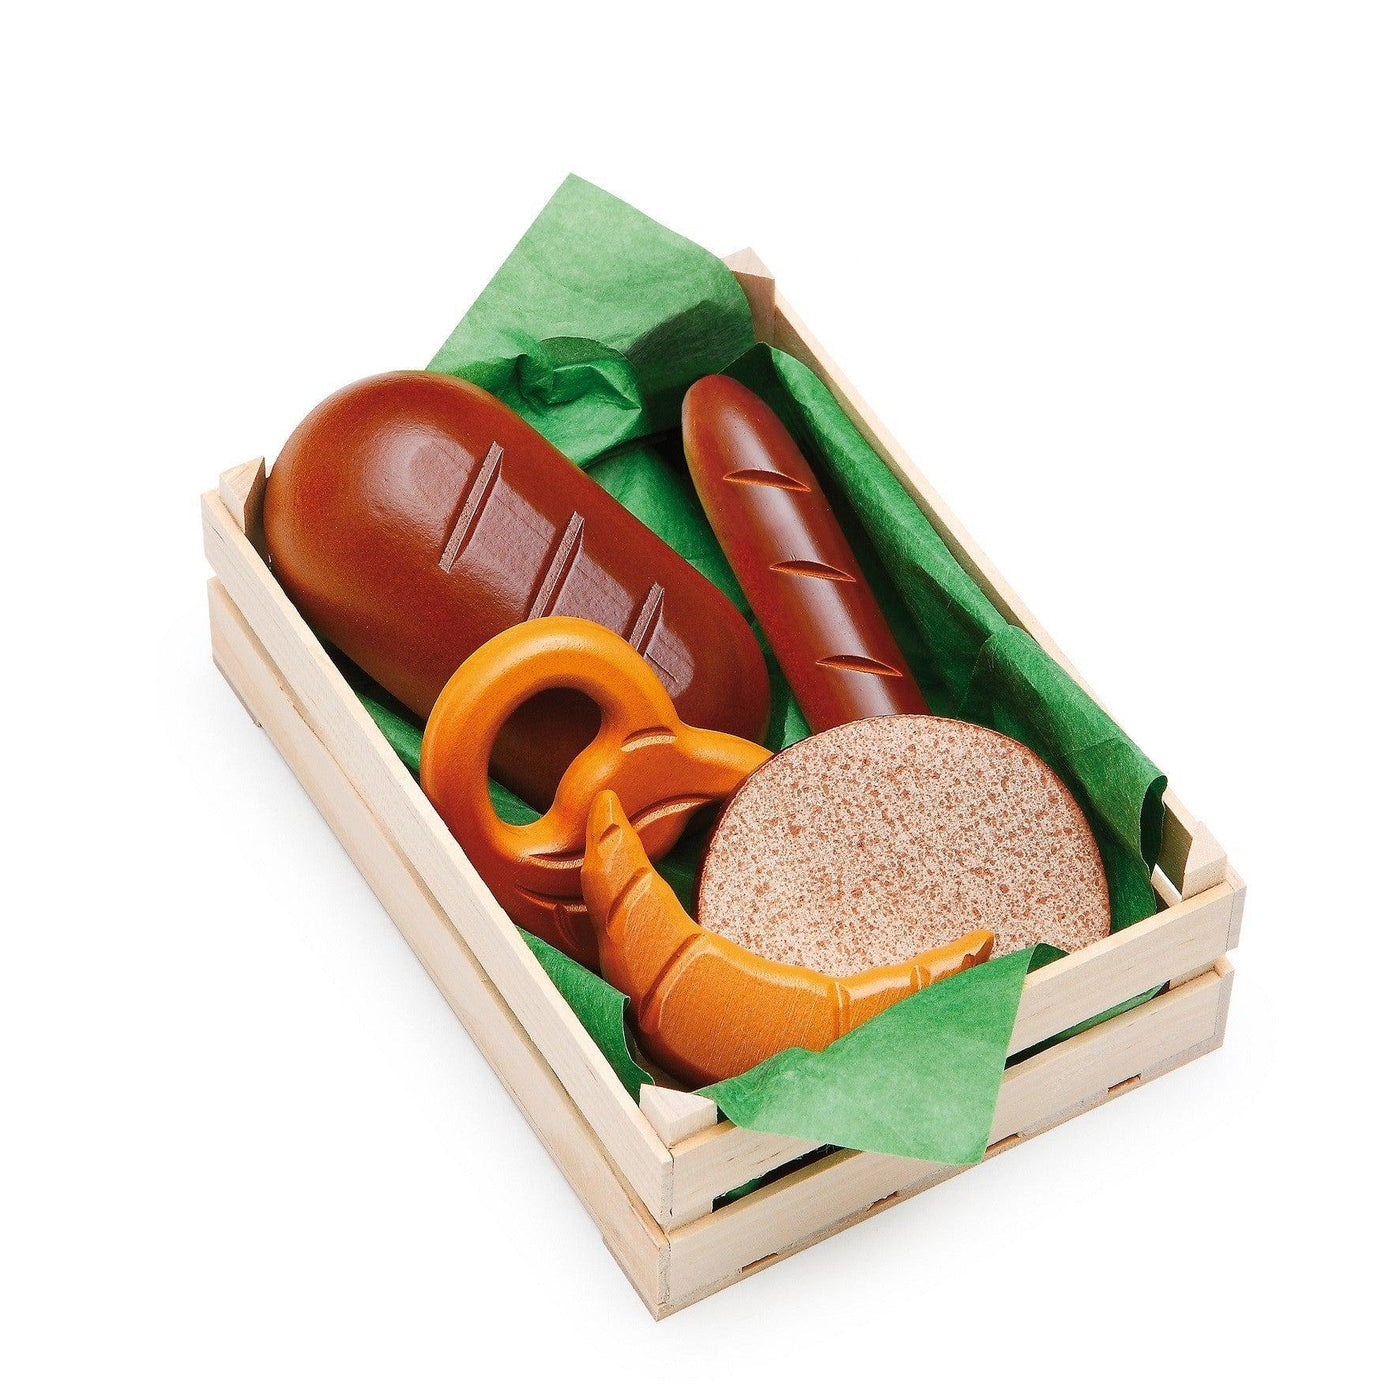 Erzi Baked Goods - Wooden Play Food